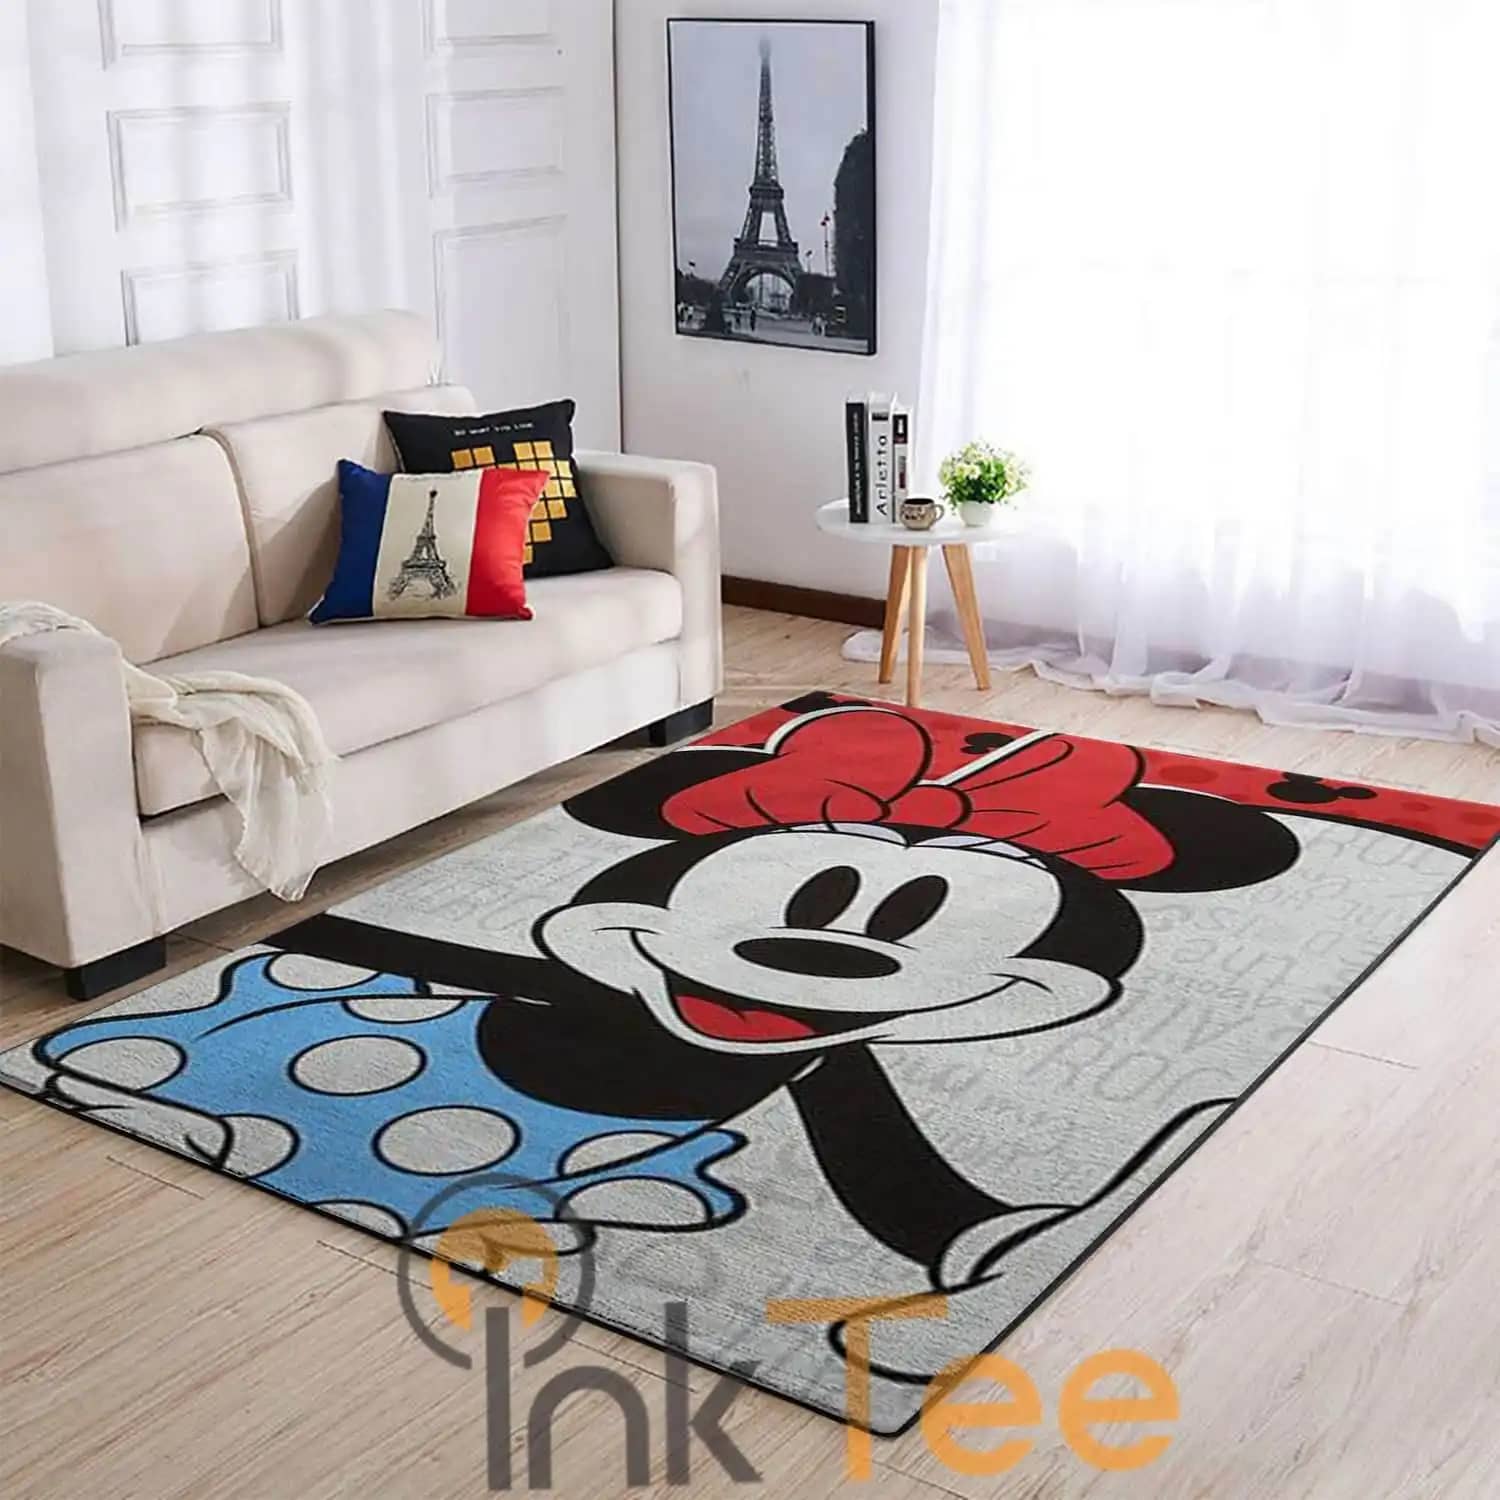 Cute Minnie Mickey Living Room Area Amazon Best Seller 4110 Rug